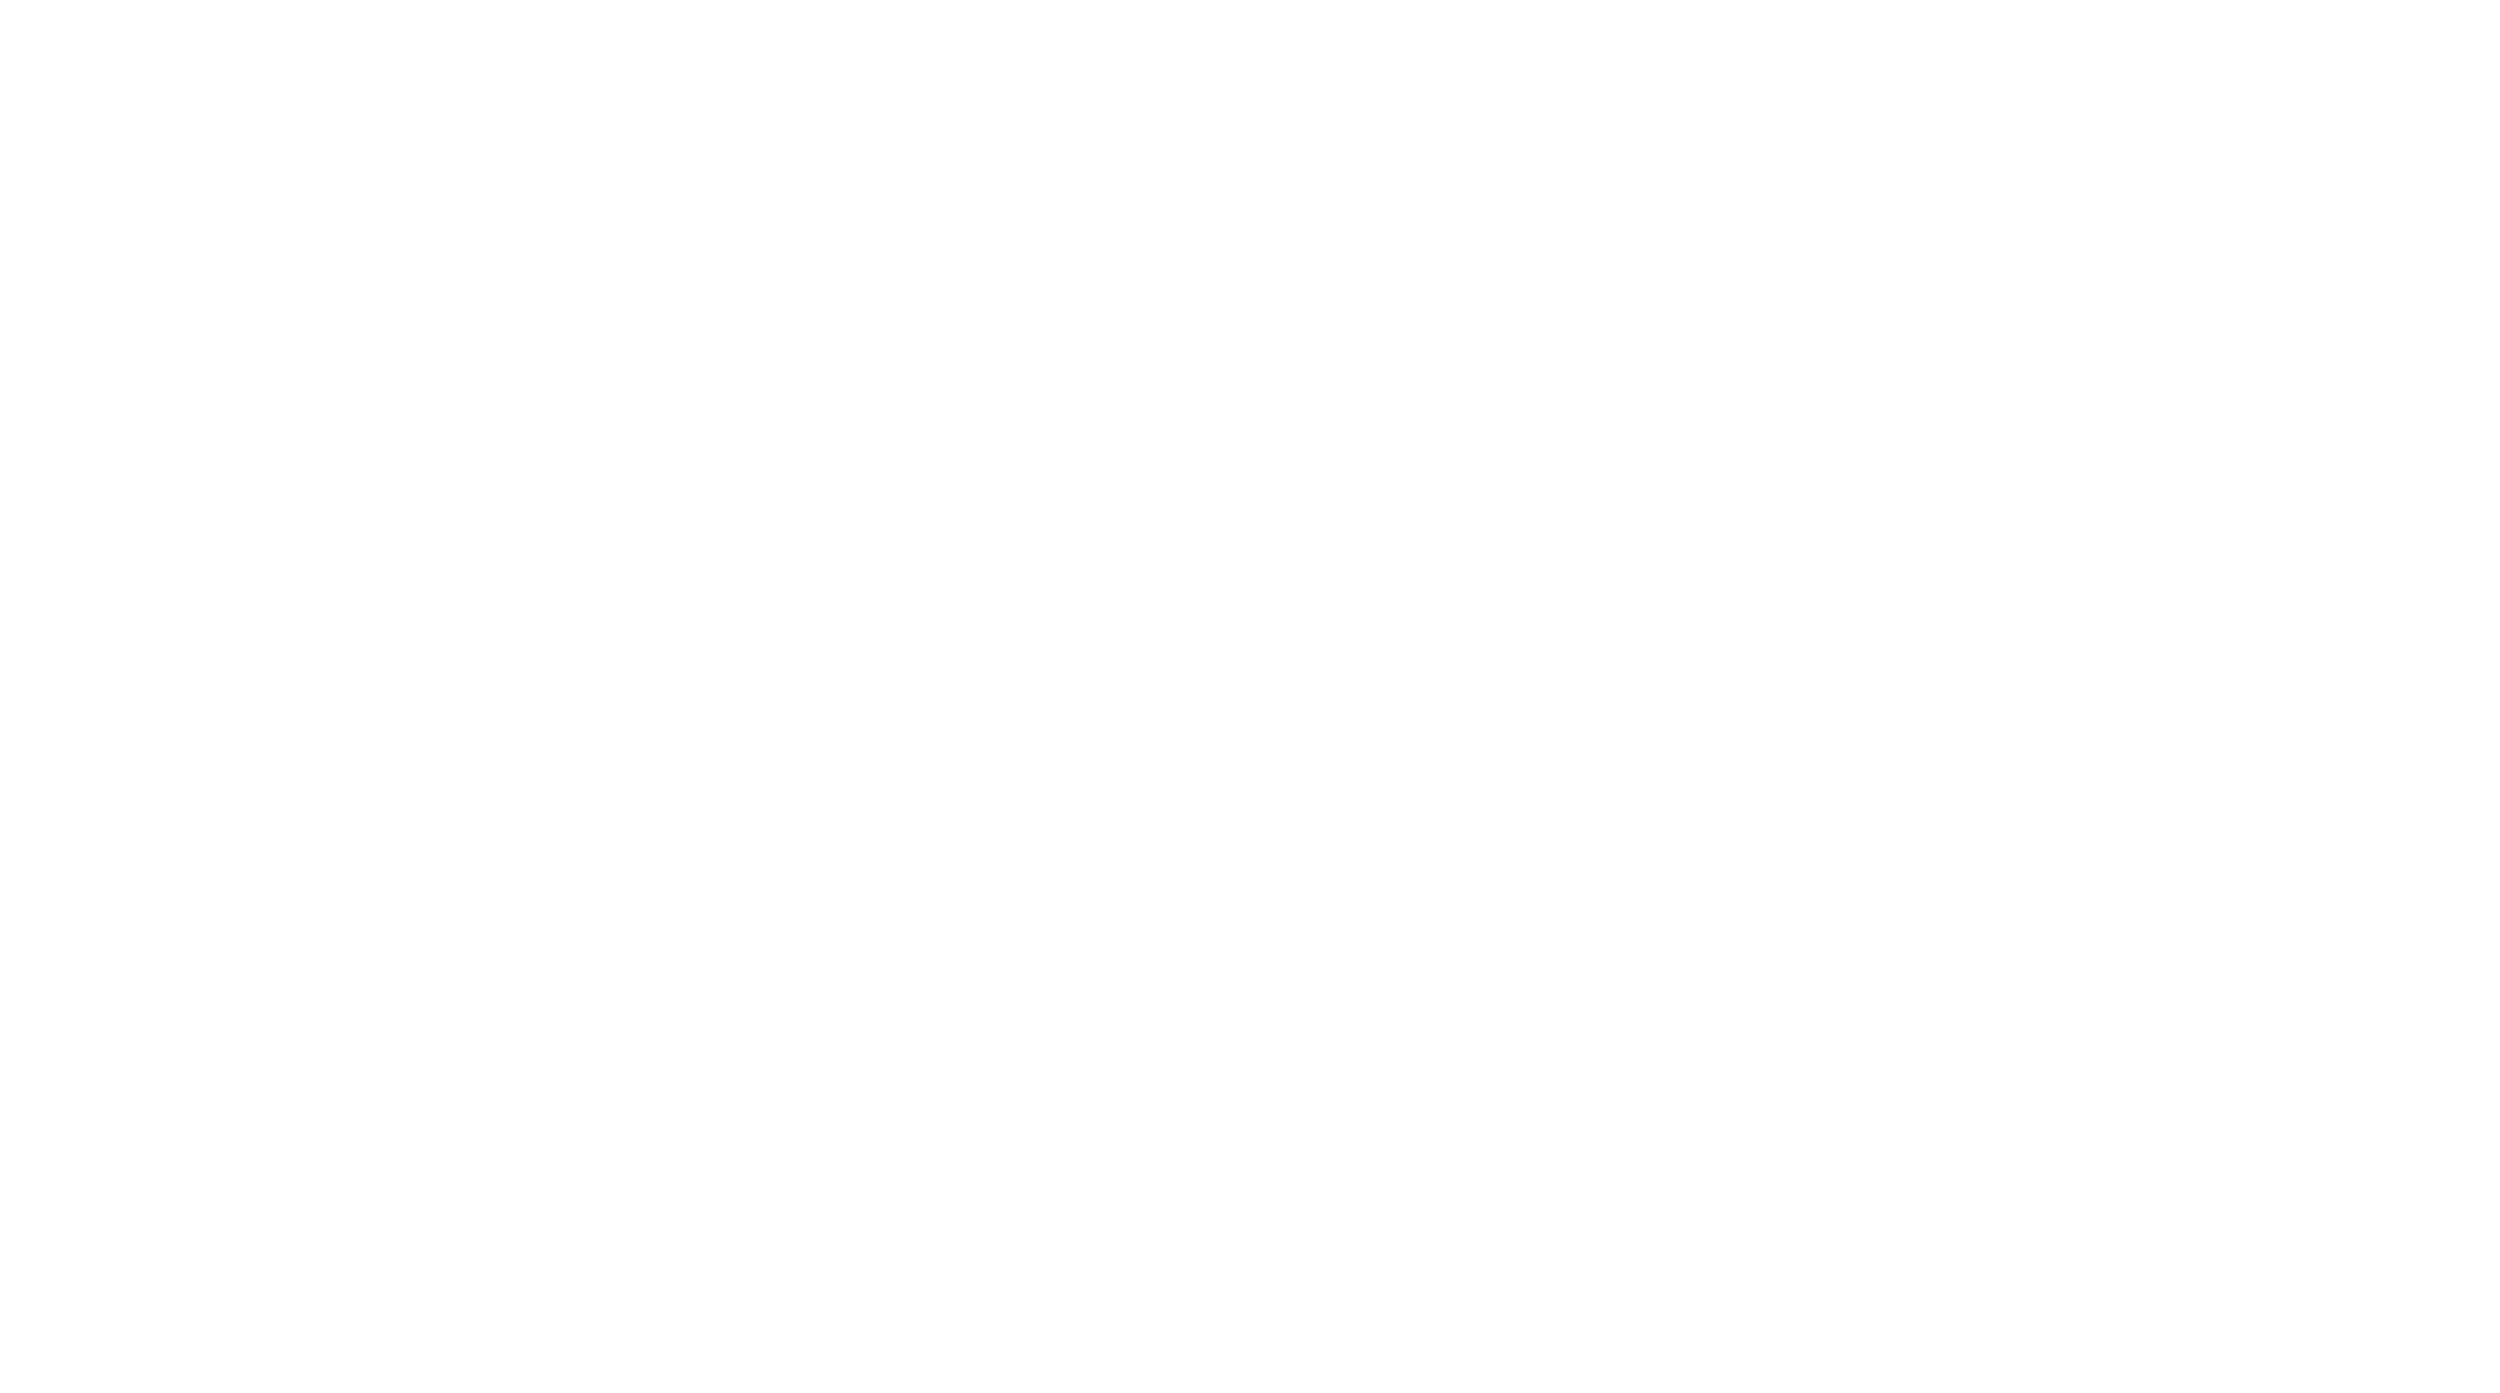 New England Outdoorsman